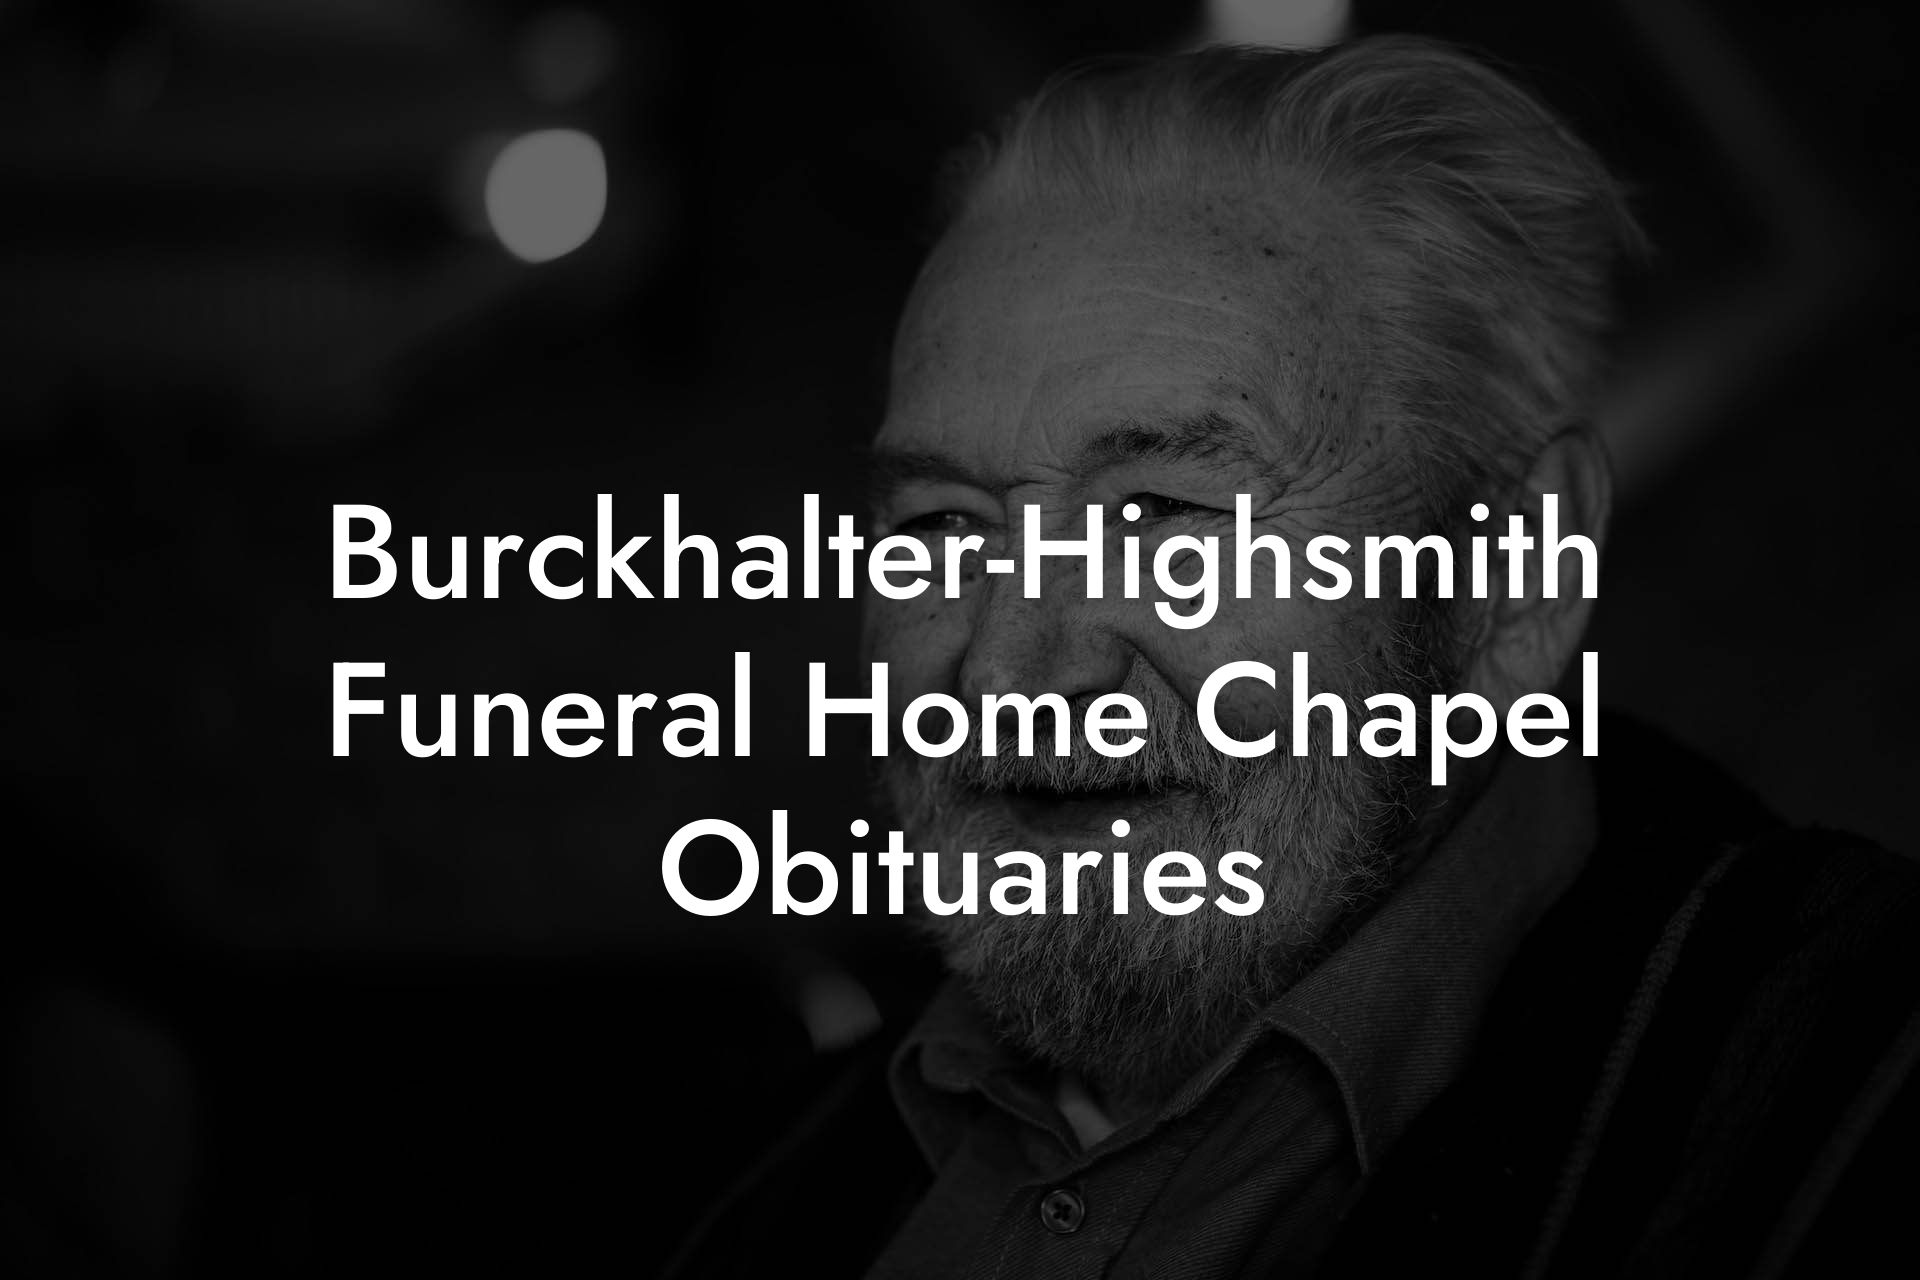 Burckhalter-Highsmith Funeral Home Chapel Obituaries - Eulogy Assistant